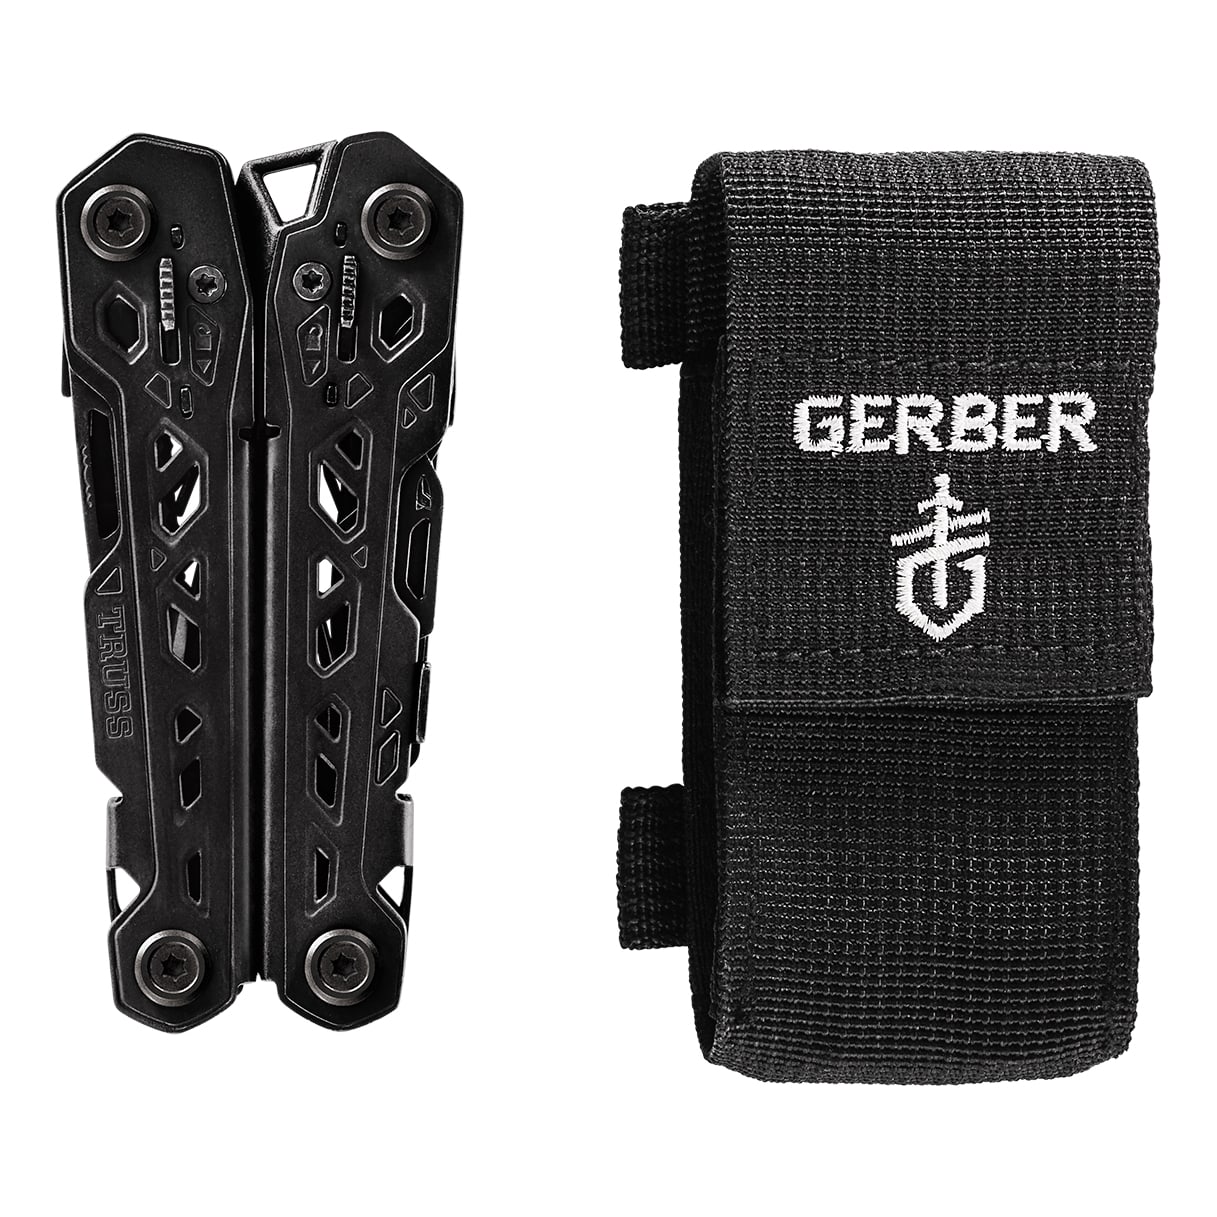 Gerber® Truss Black Multi-Tool - Closed with Sheath View